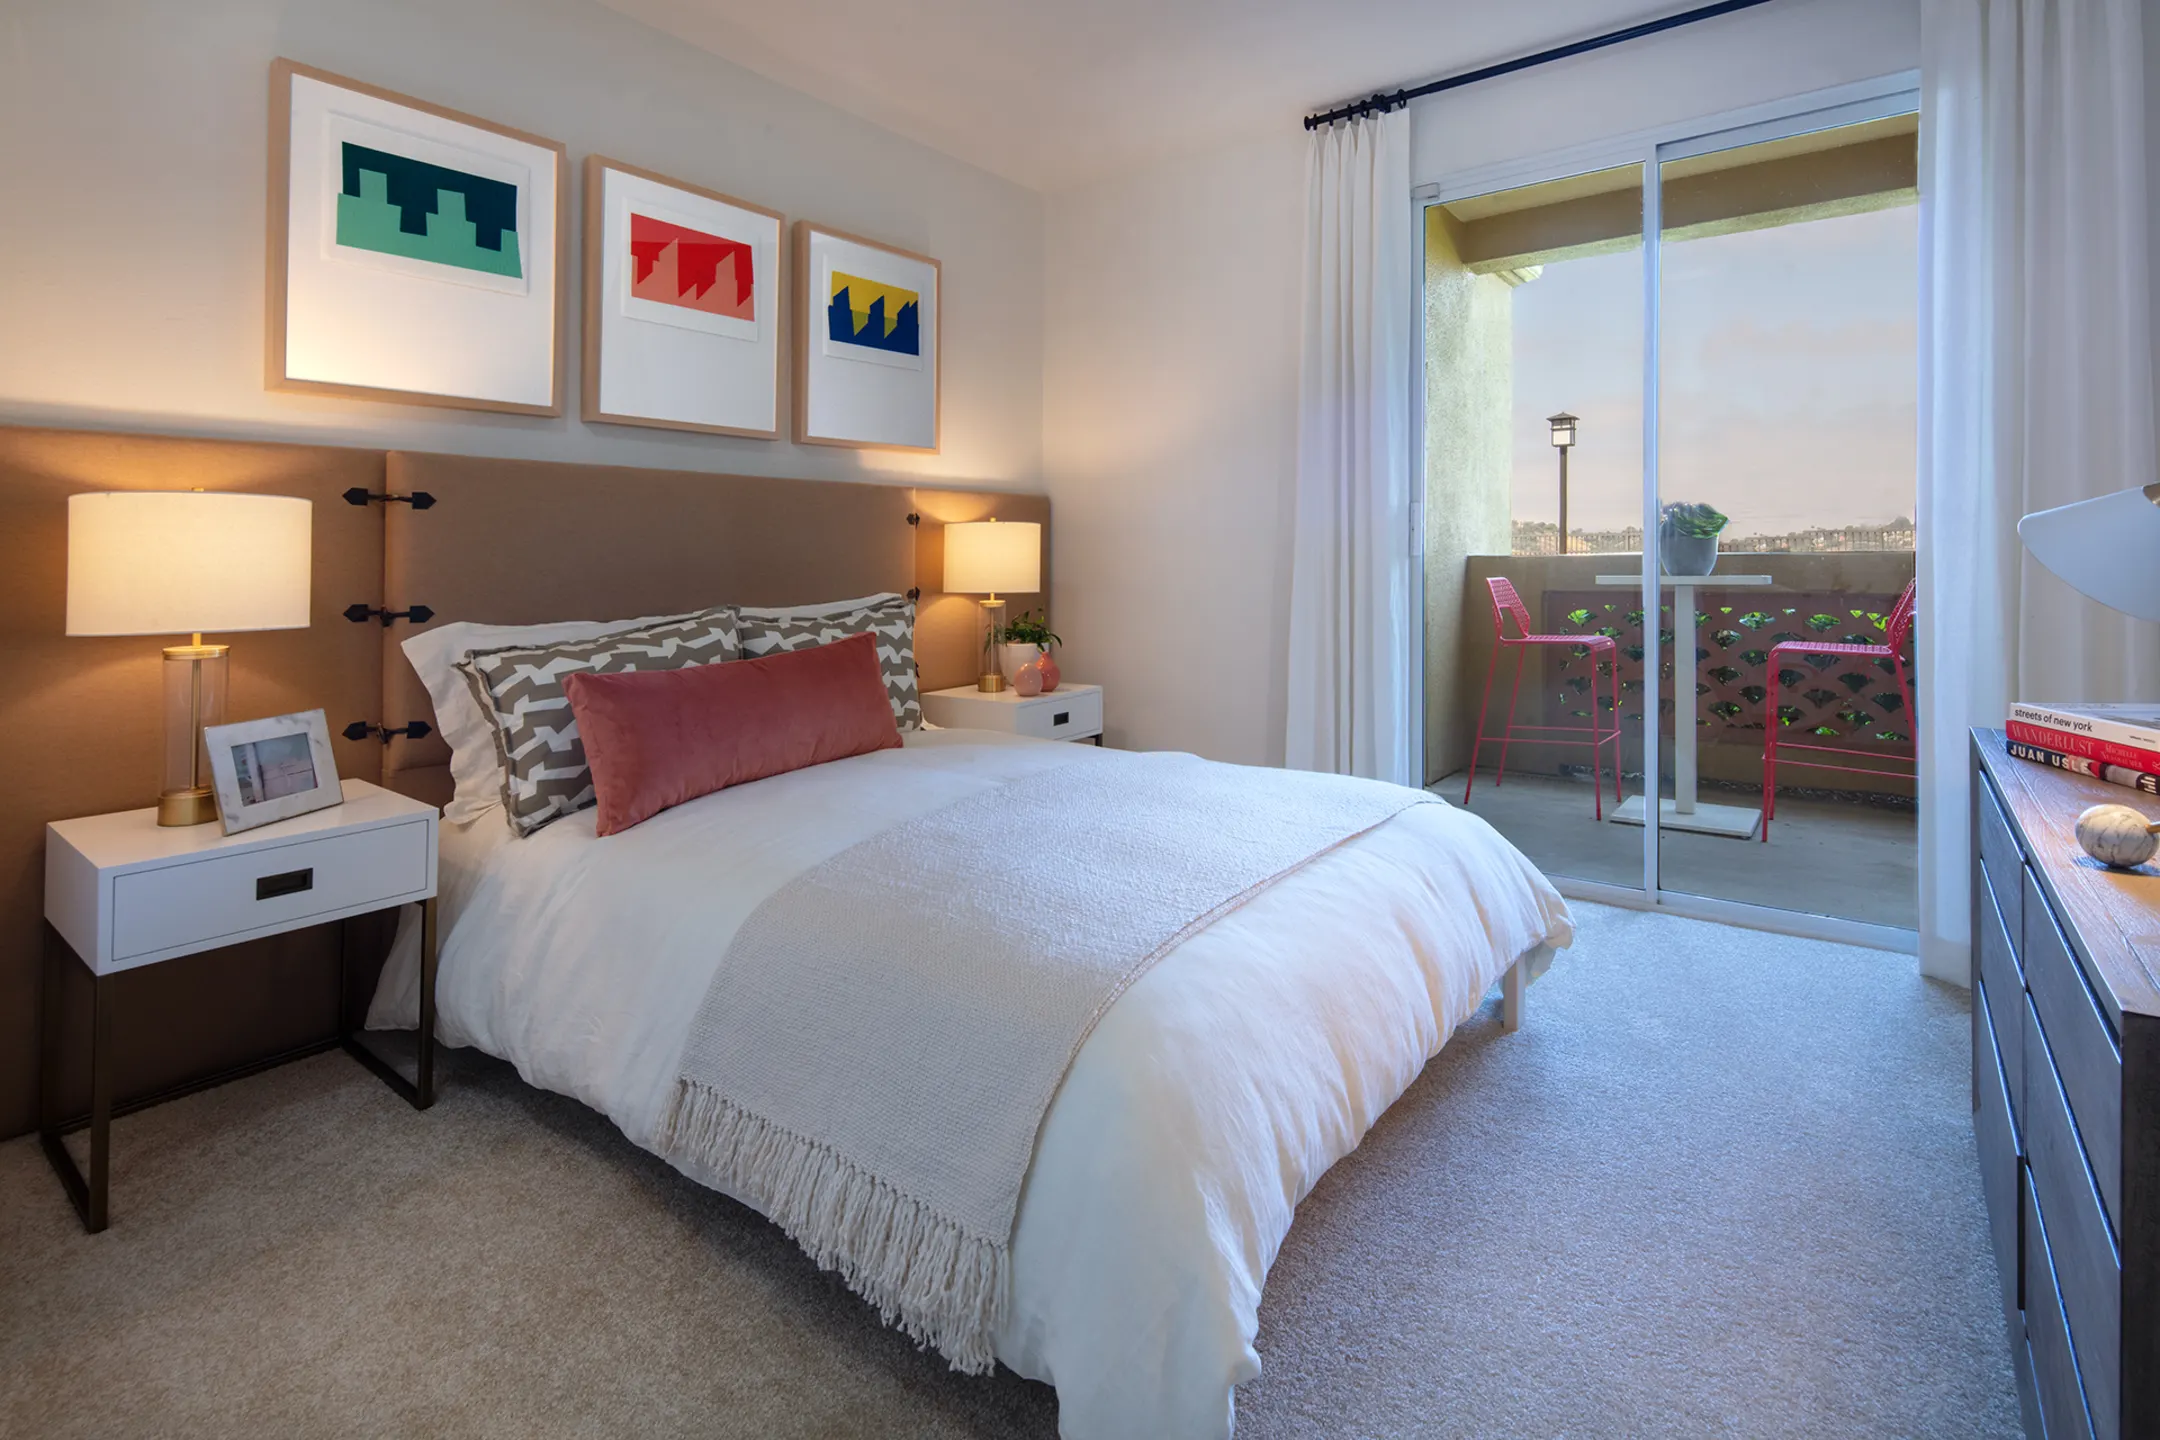 Bedroom - Vista Real Apartment Homes - Mission Viejo, CA